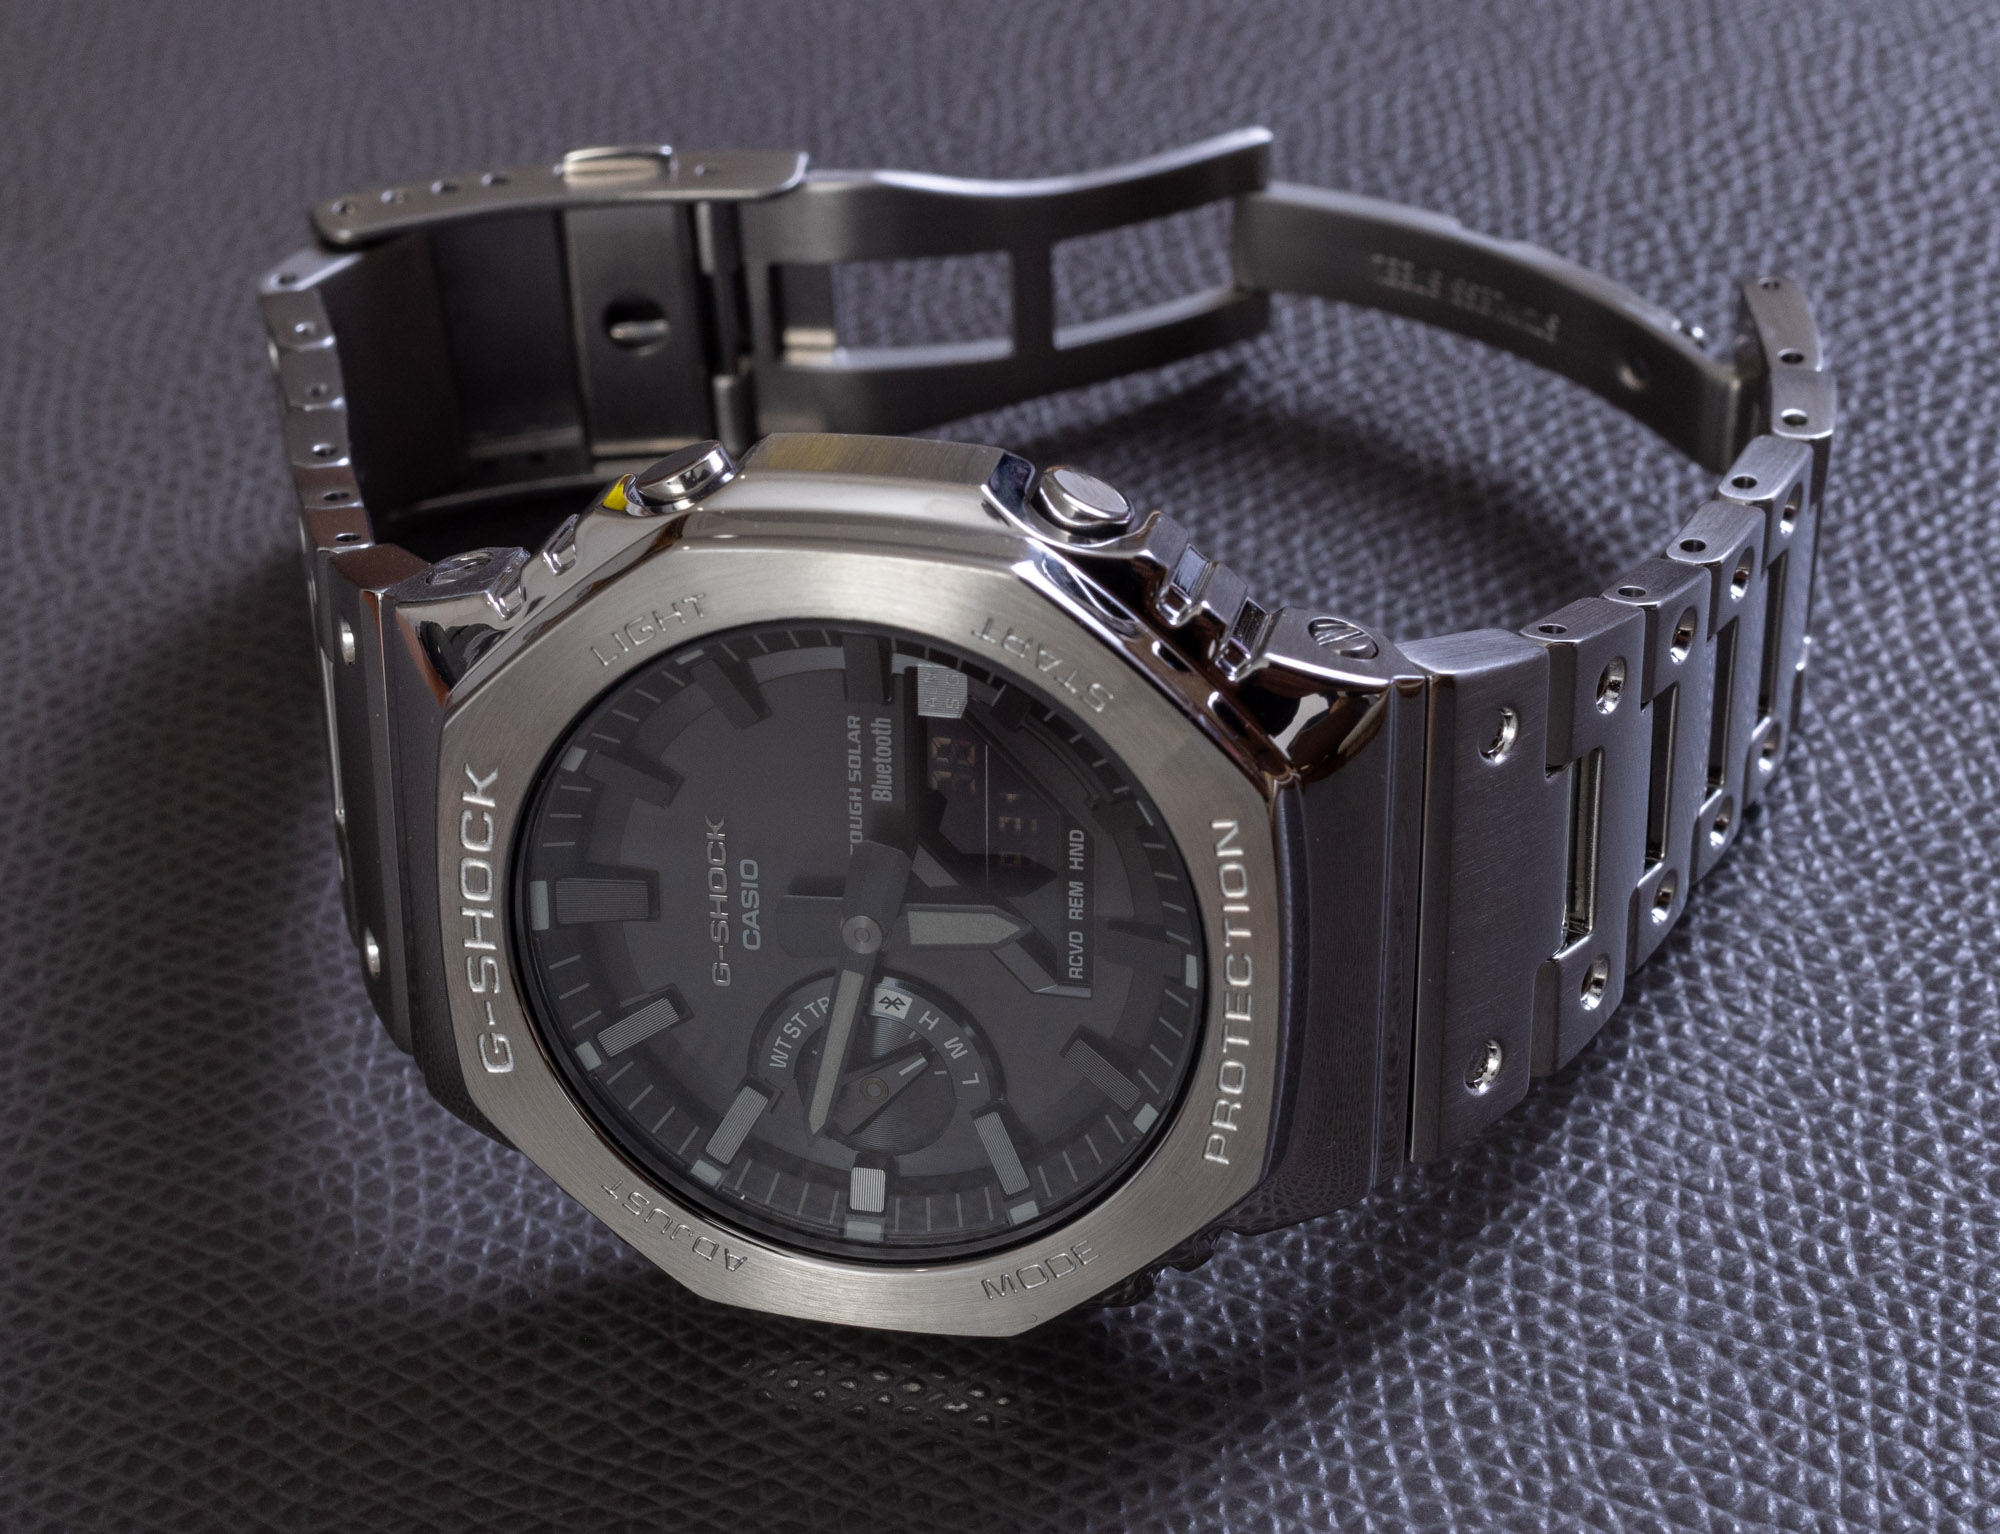 Full-Metal Bracelet | GMB2100 G-Shock Watch In aBlogtoWatch On Review: Casio